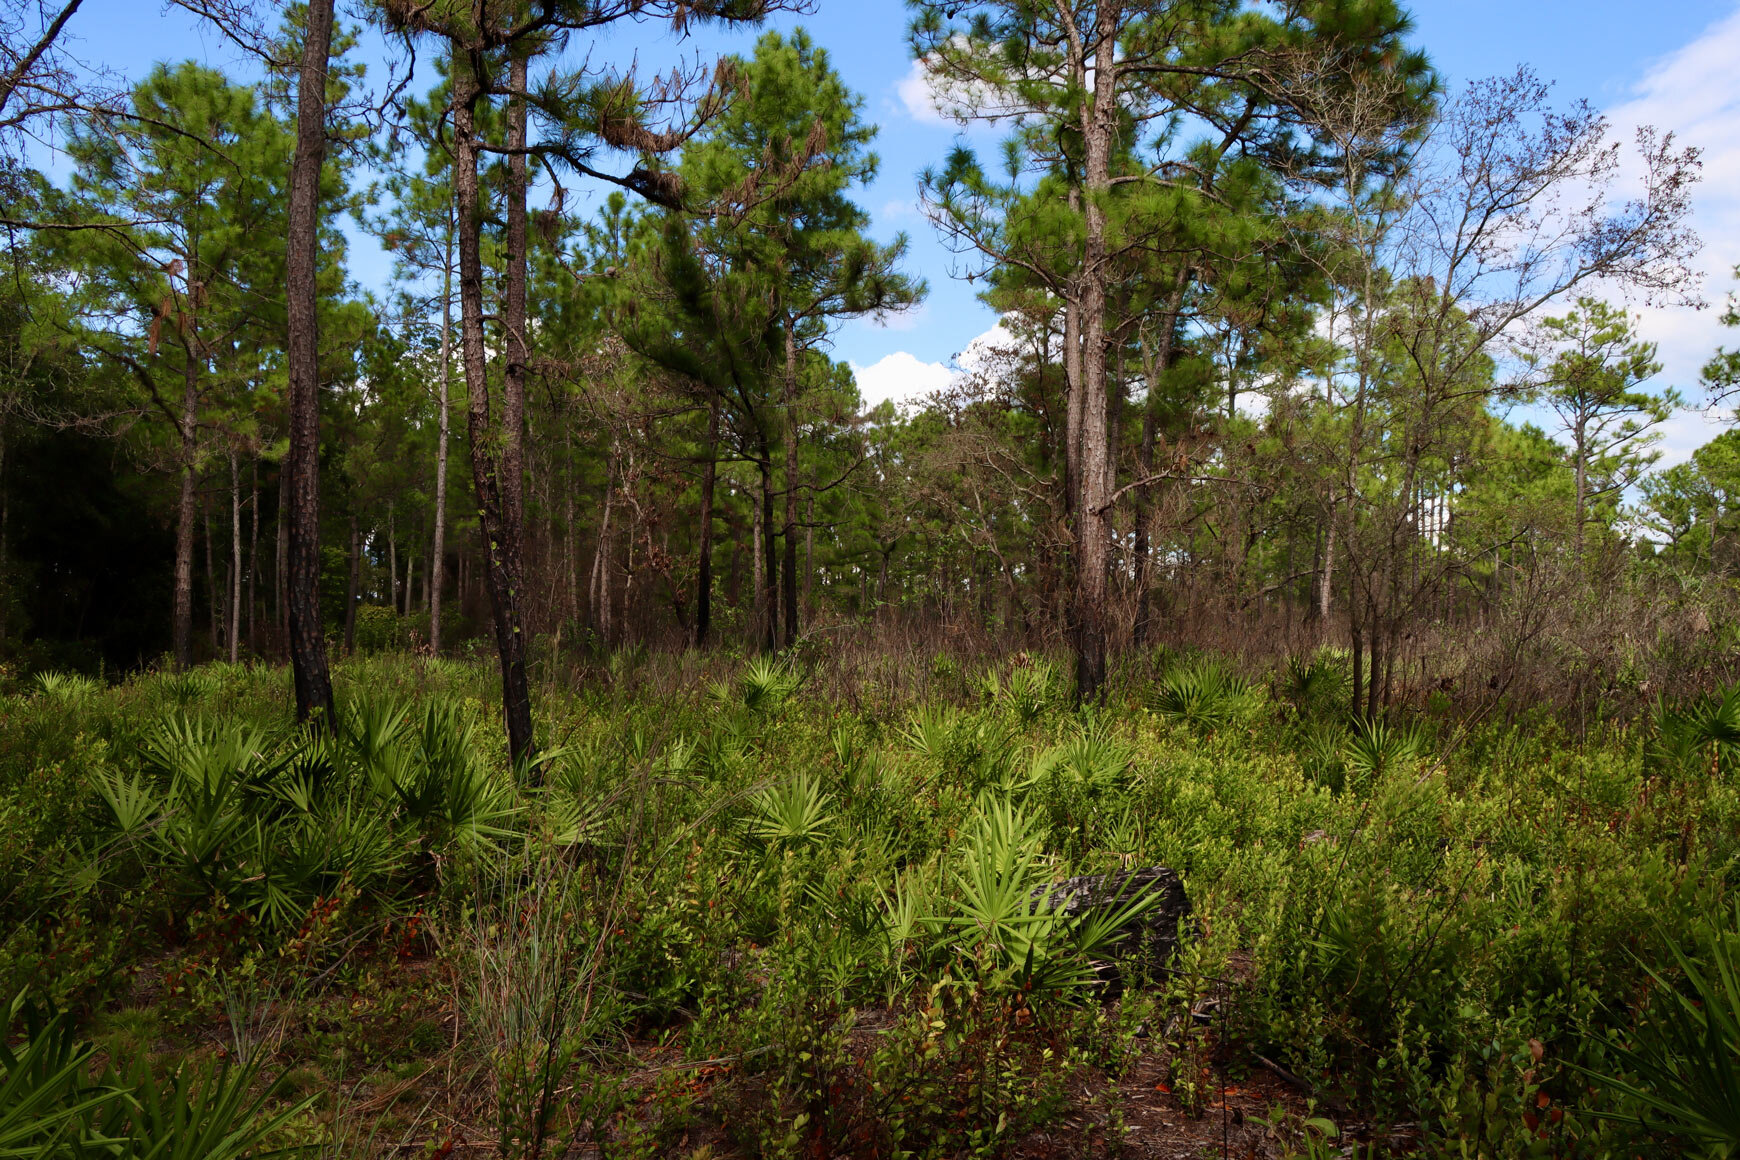  Longleaf pine and saw palmetto - flatwoods habitat 